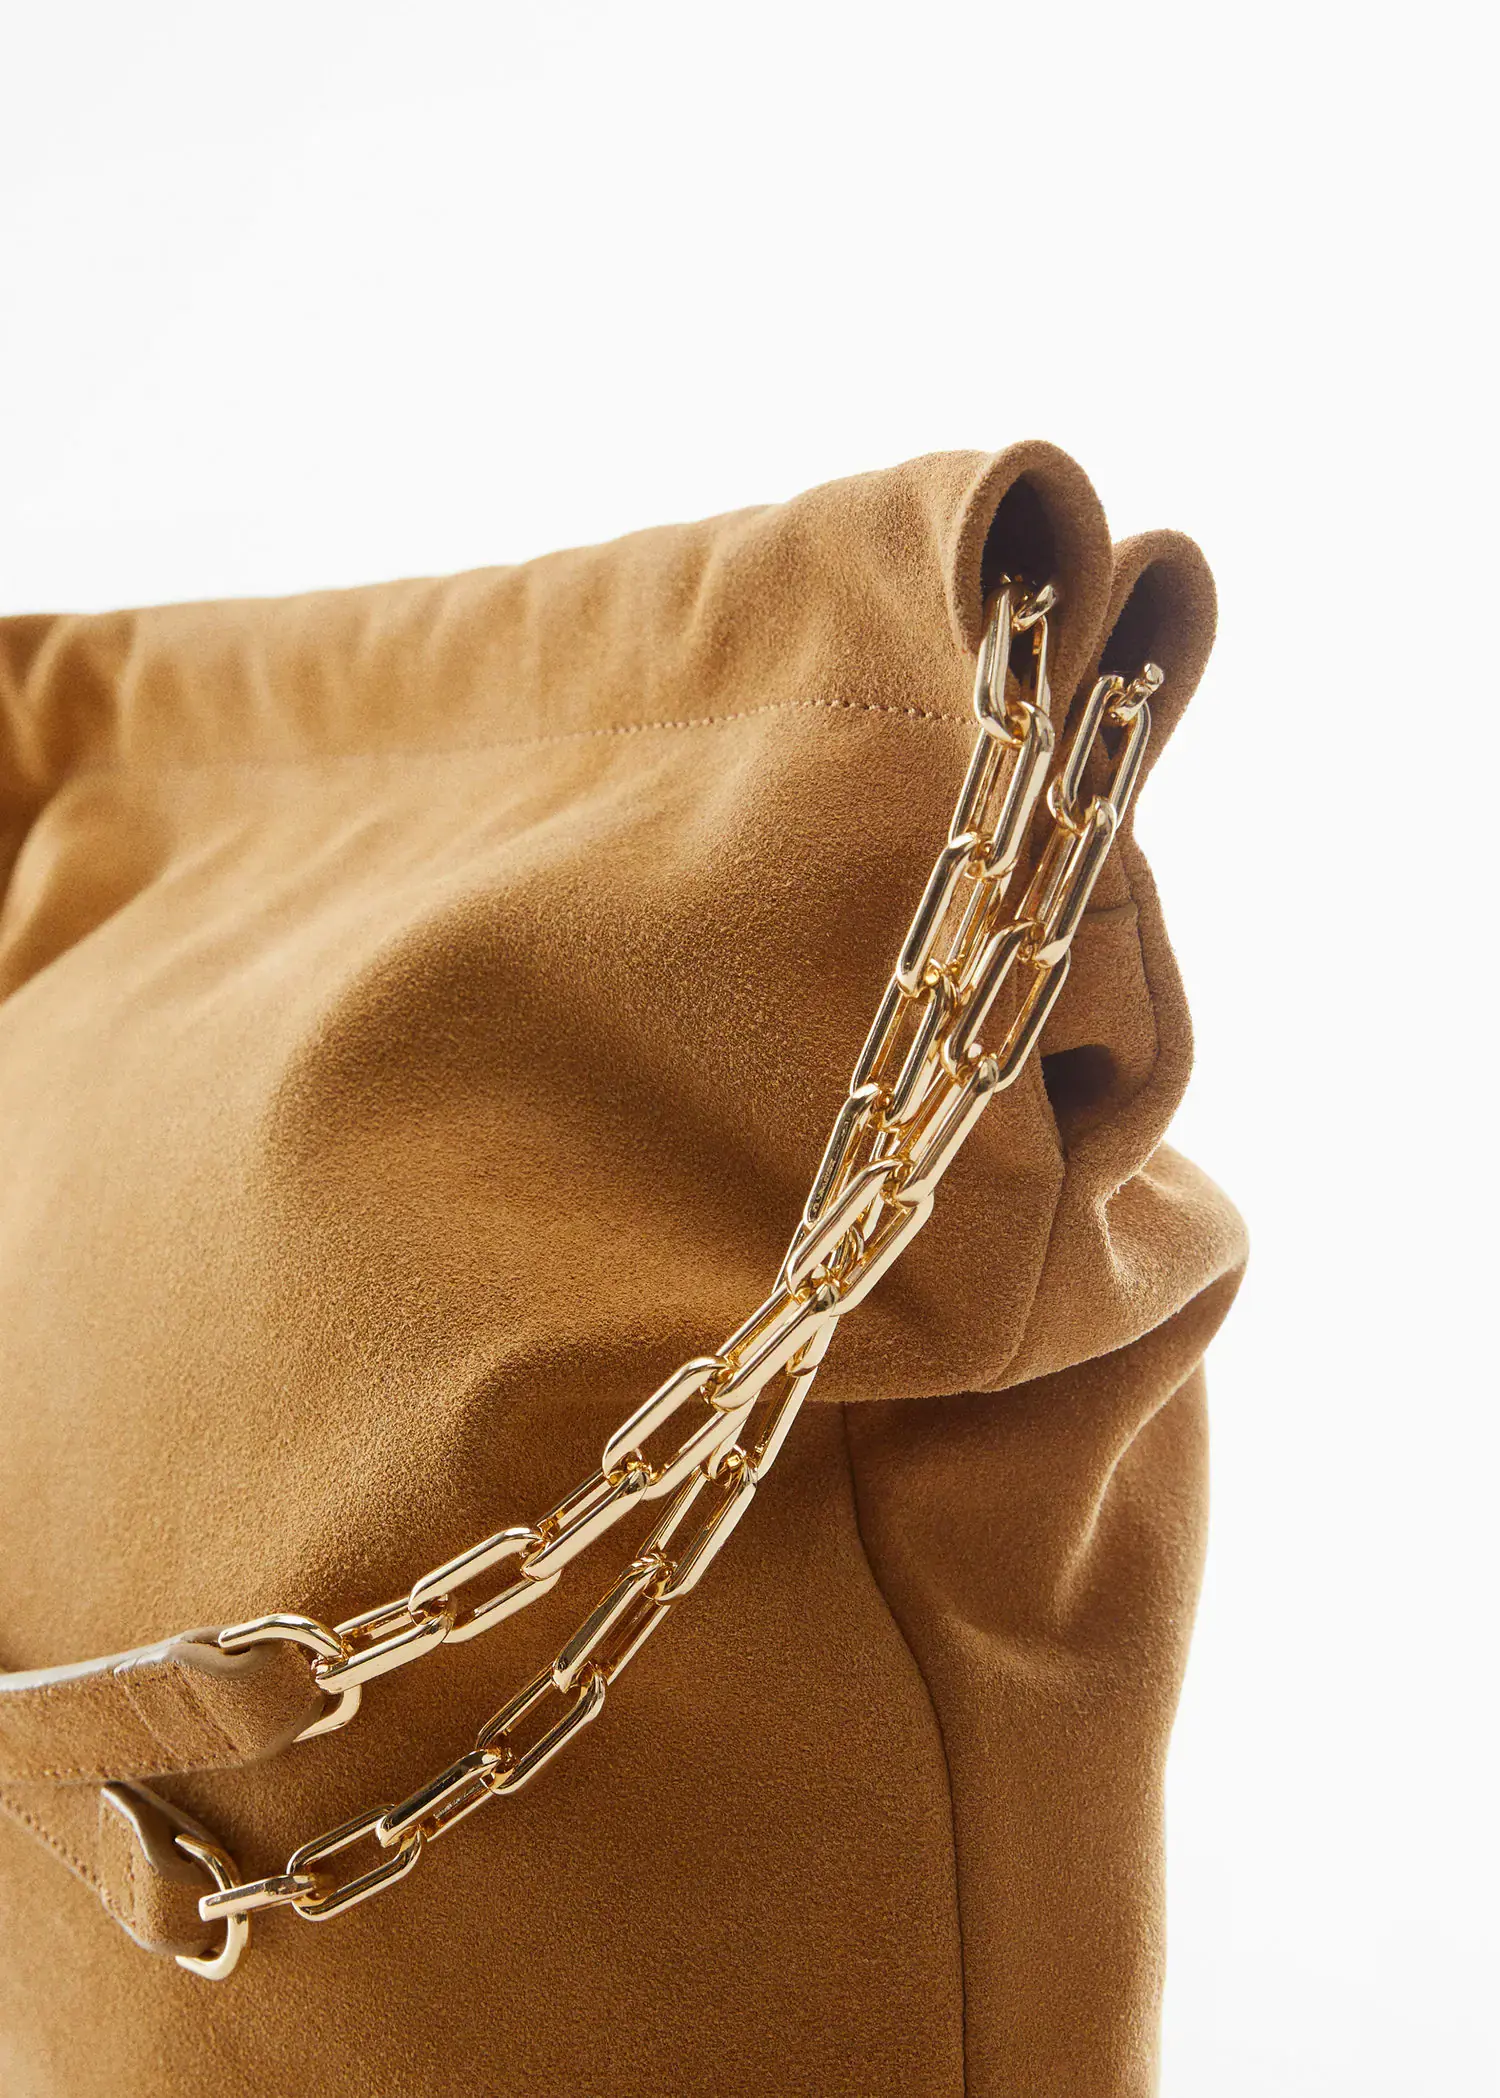 Mango Chain leather bag. 2